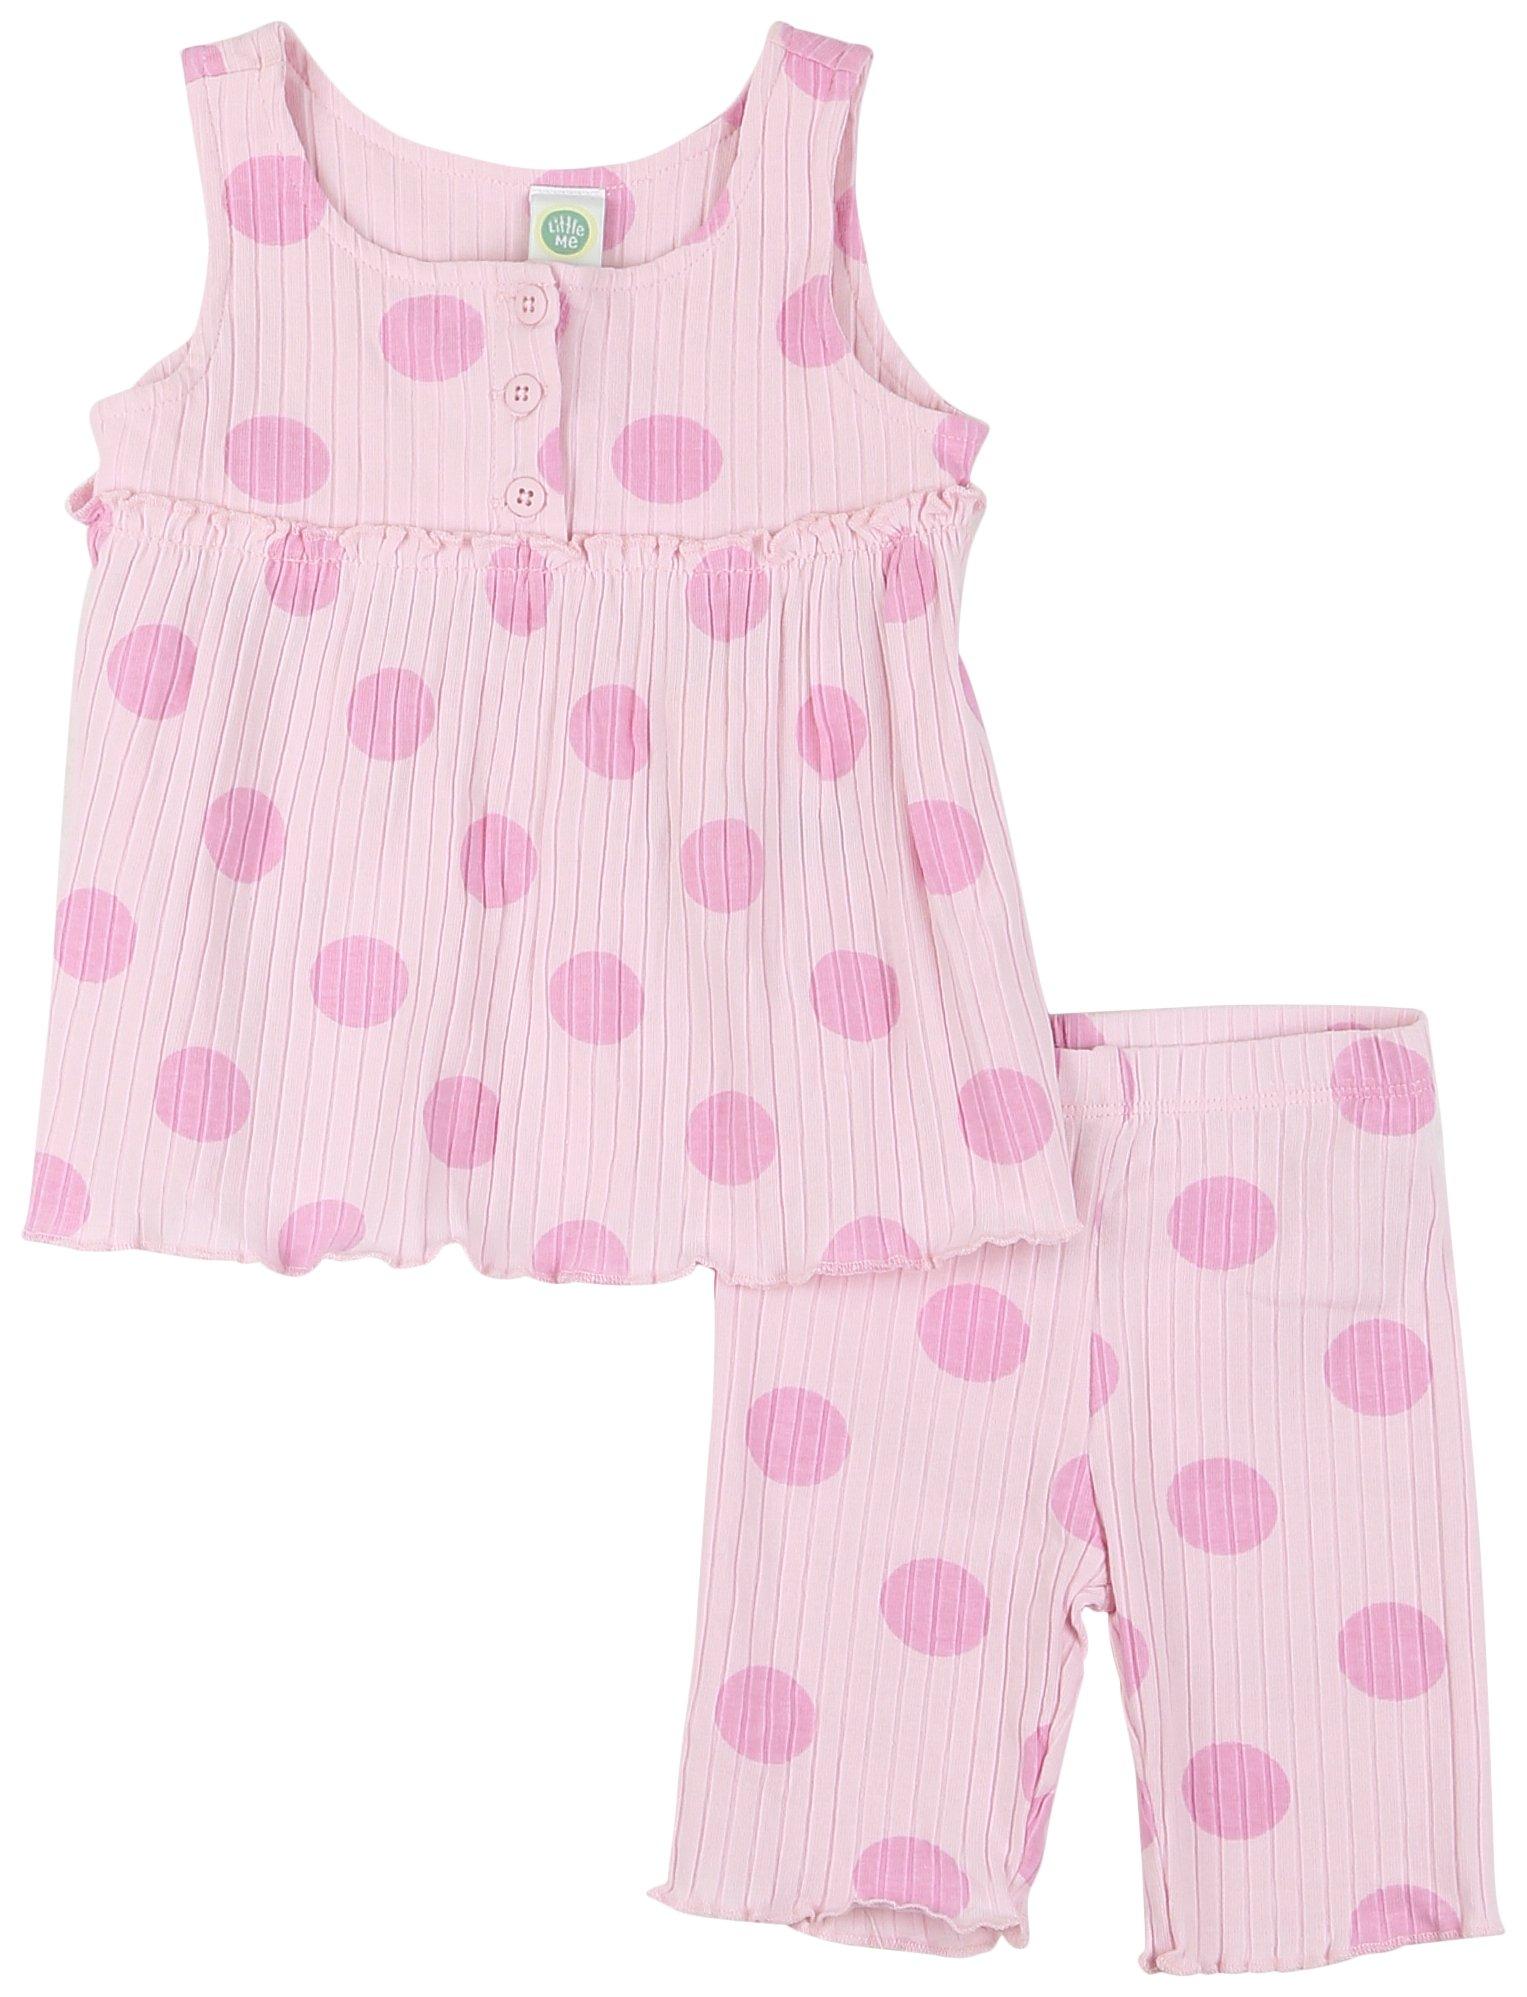 Toddler Girls 2pc. Short Sleeve Dot Peplum Ribbed Dress Set